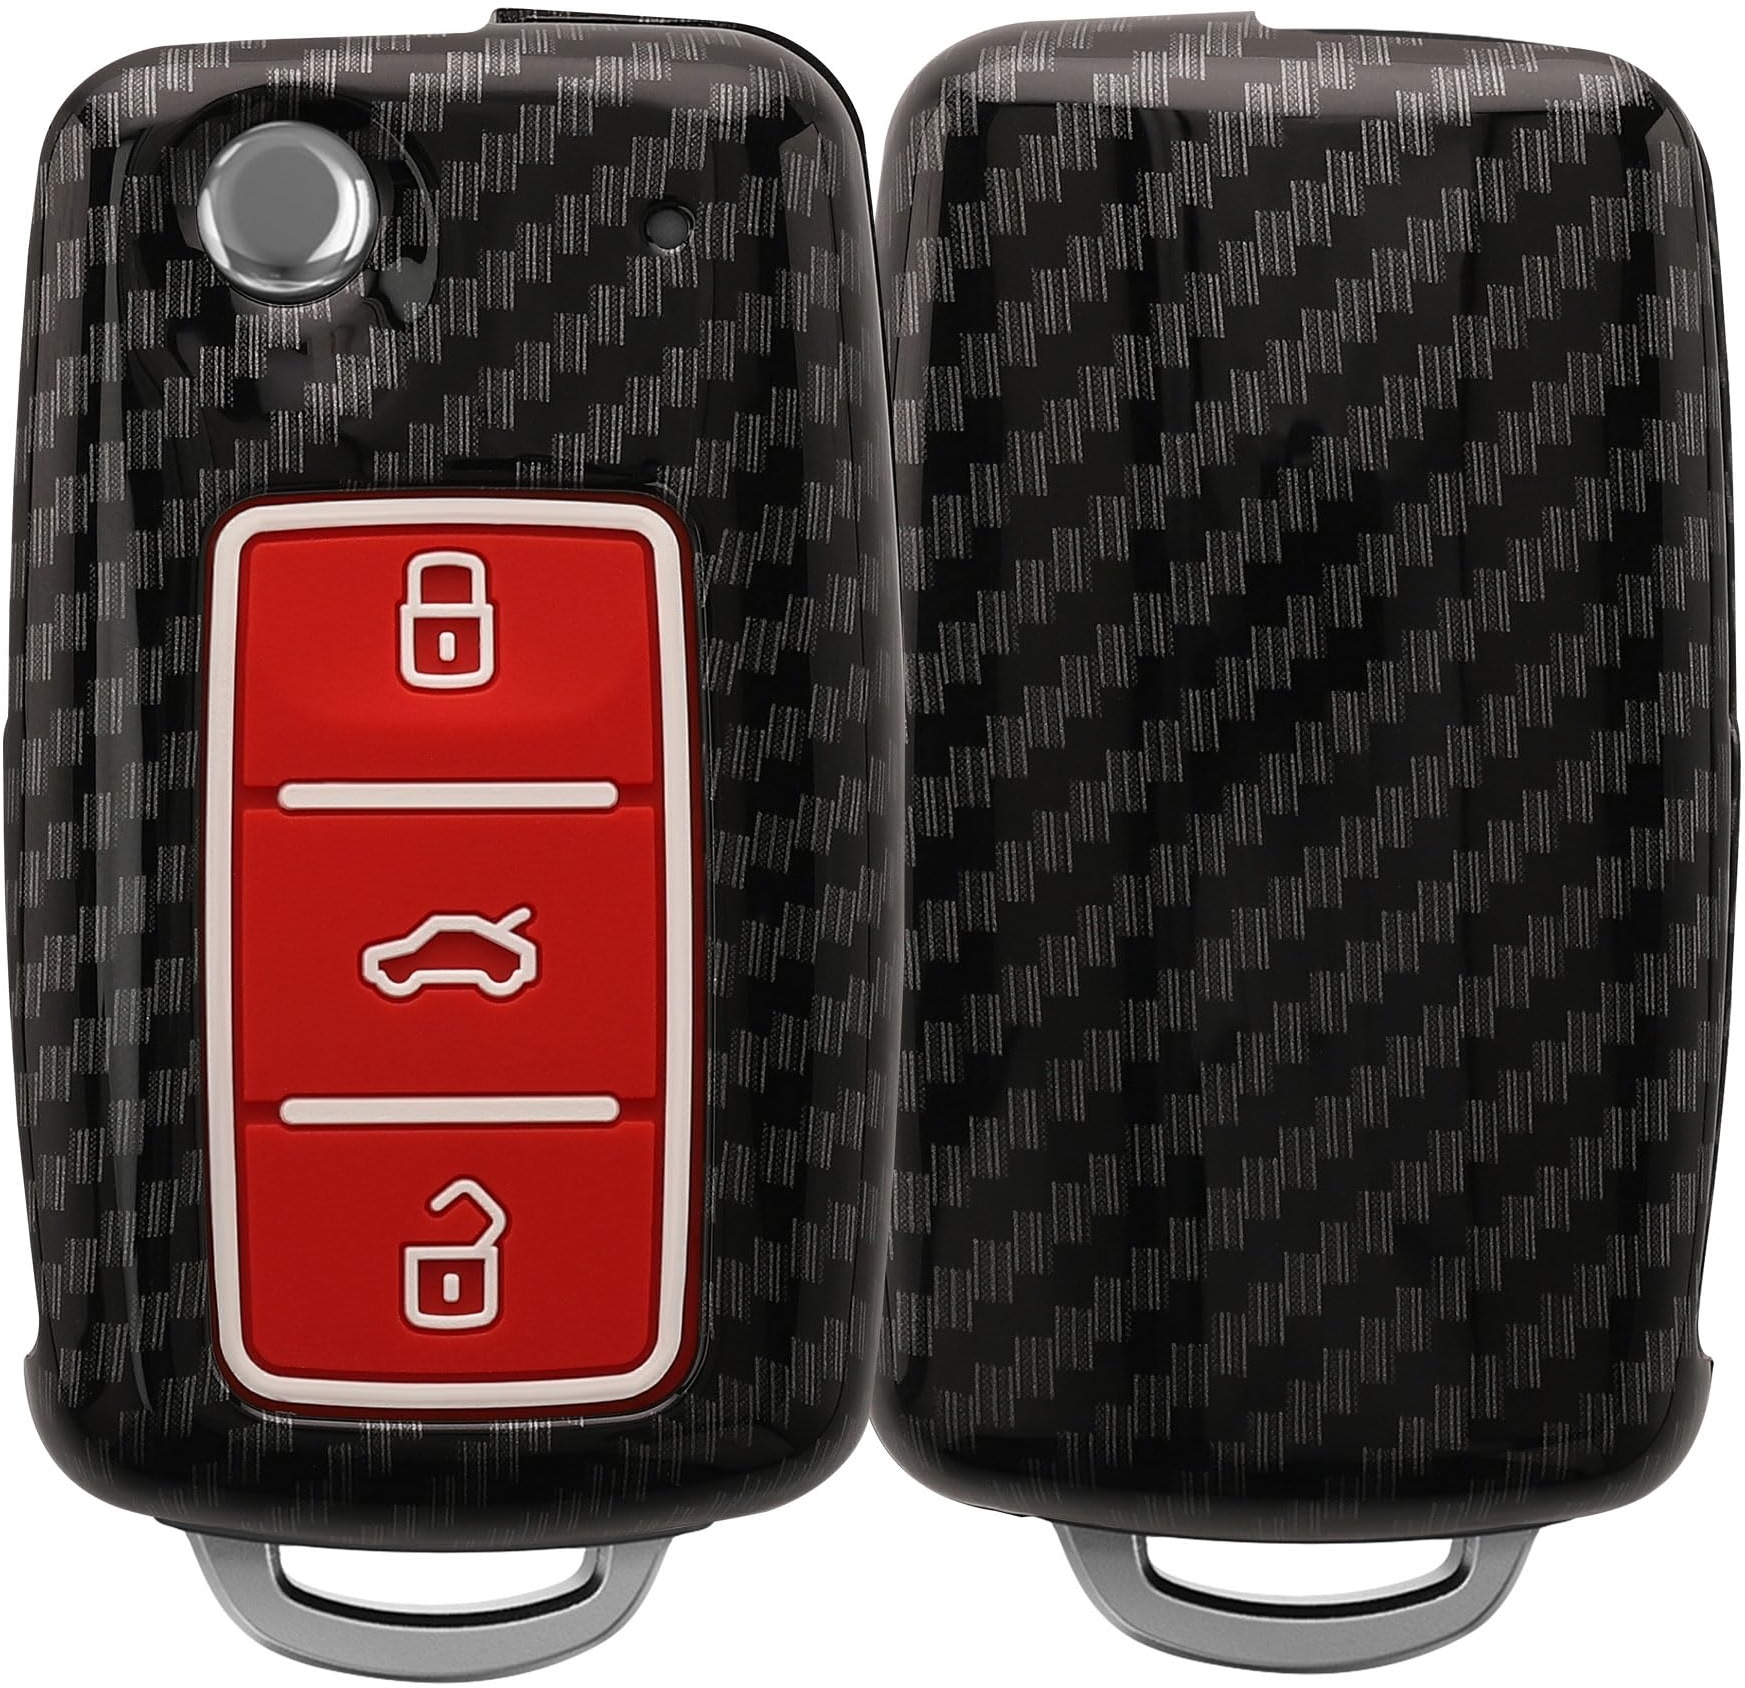 kwmobile Autoschlüssel Hülle kompatibel mit VW Skoda Seat 3-Tasten Autoschlüssel - Hardcover Schutzhülle Schlüsselhülle Cover Carbon Rot Schwarz